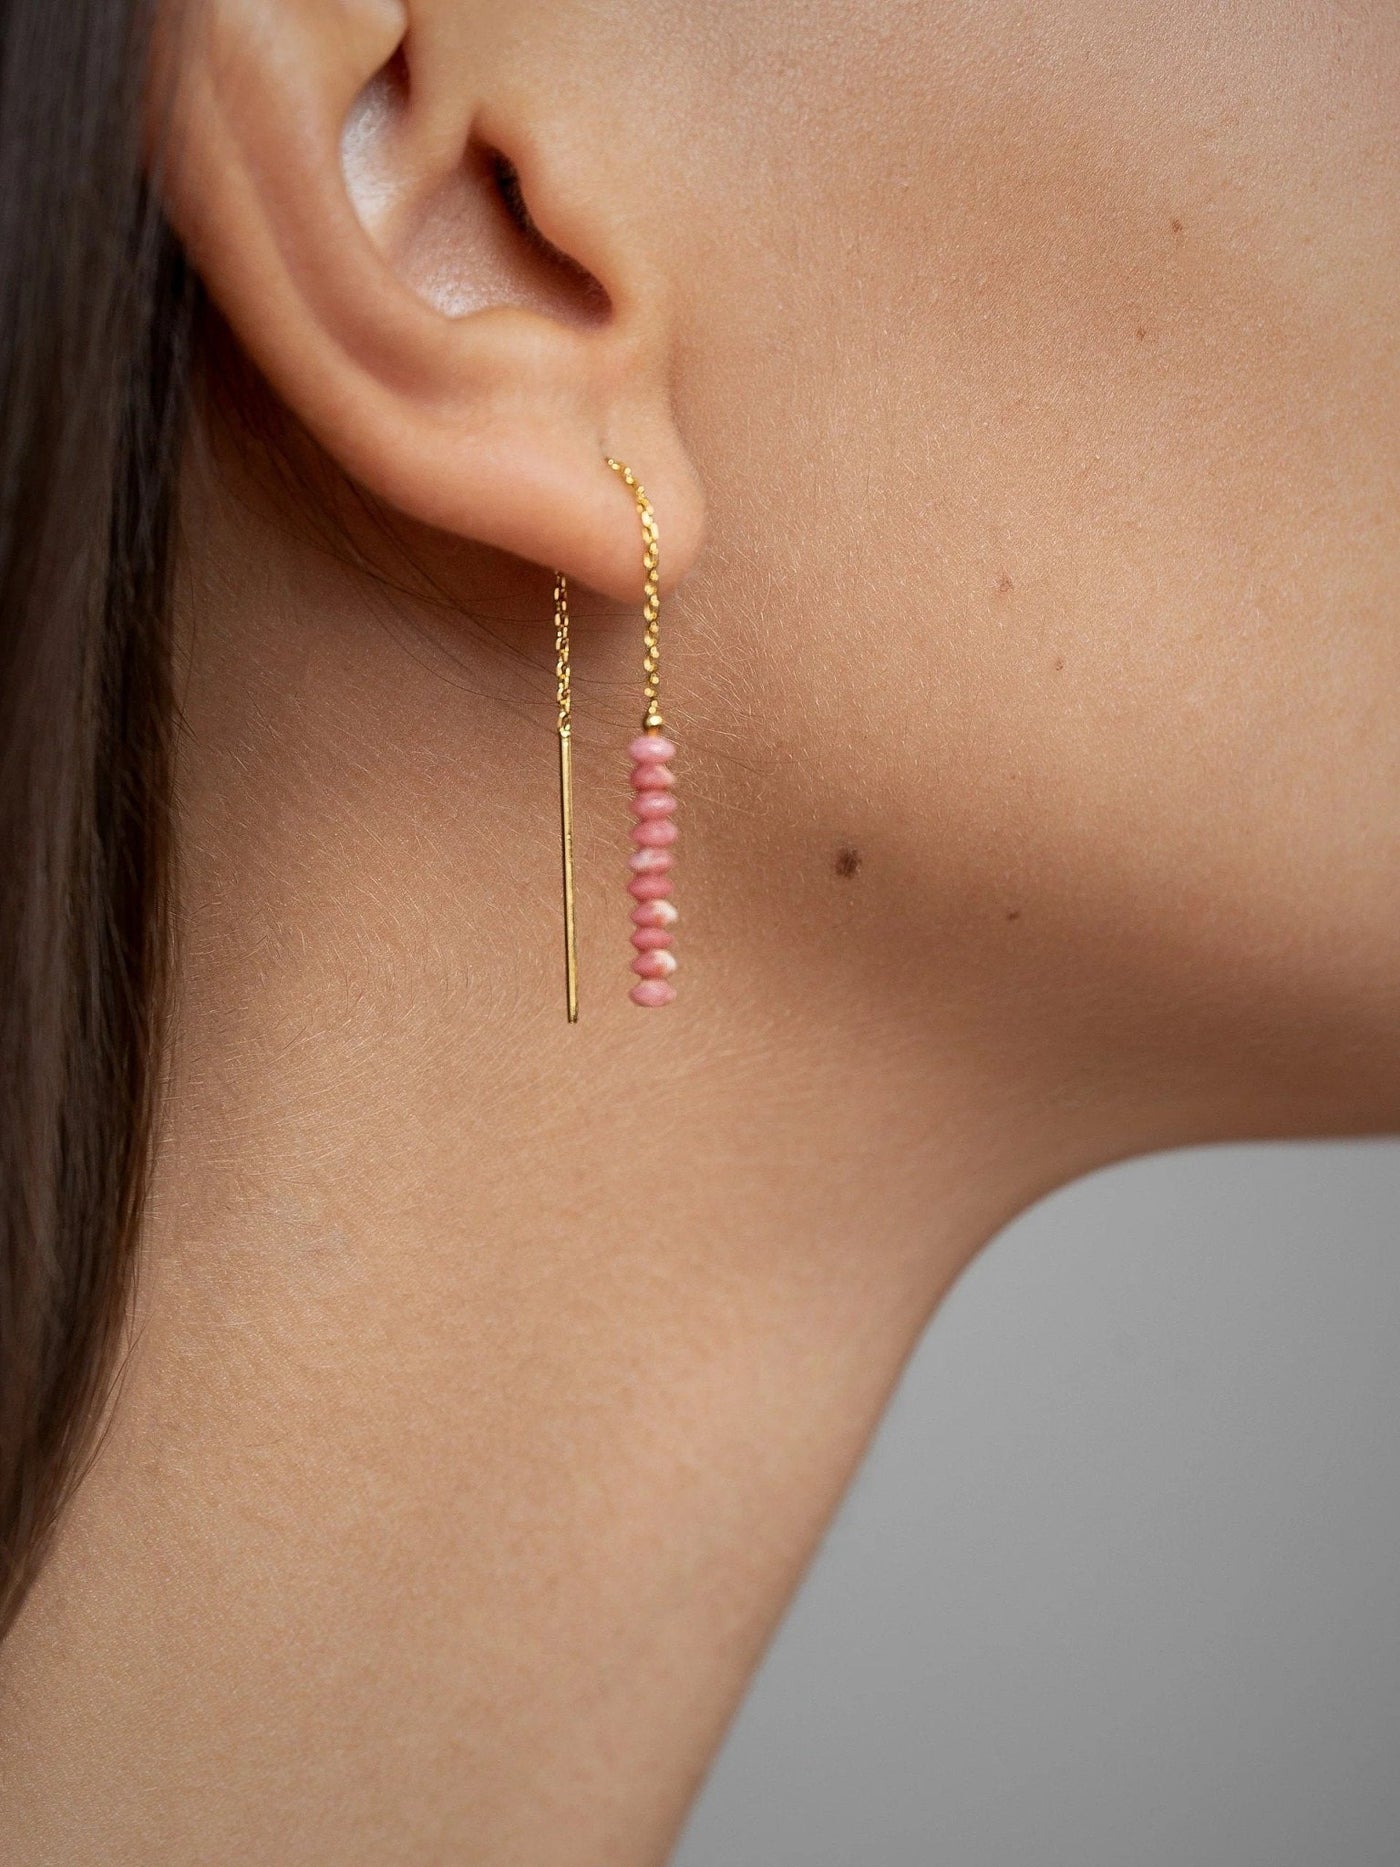 Luvia Chain Stone Earrings - 3. Rhodonite80MMchain earringscolorfull earringsLunai Jewelry